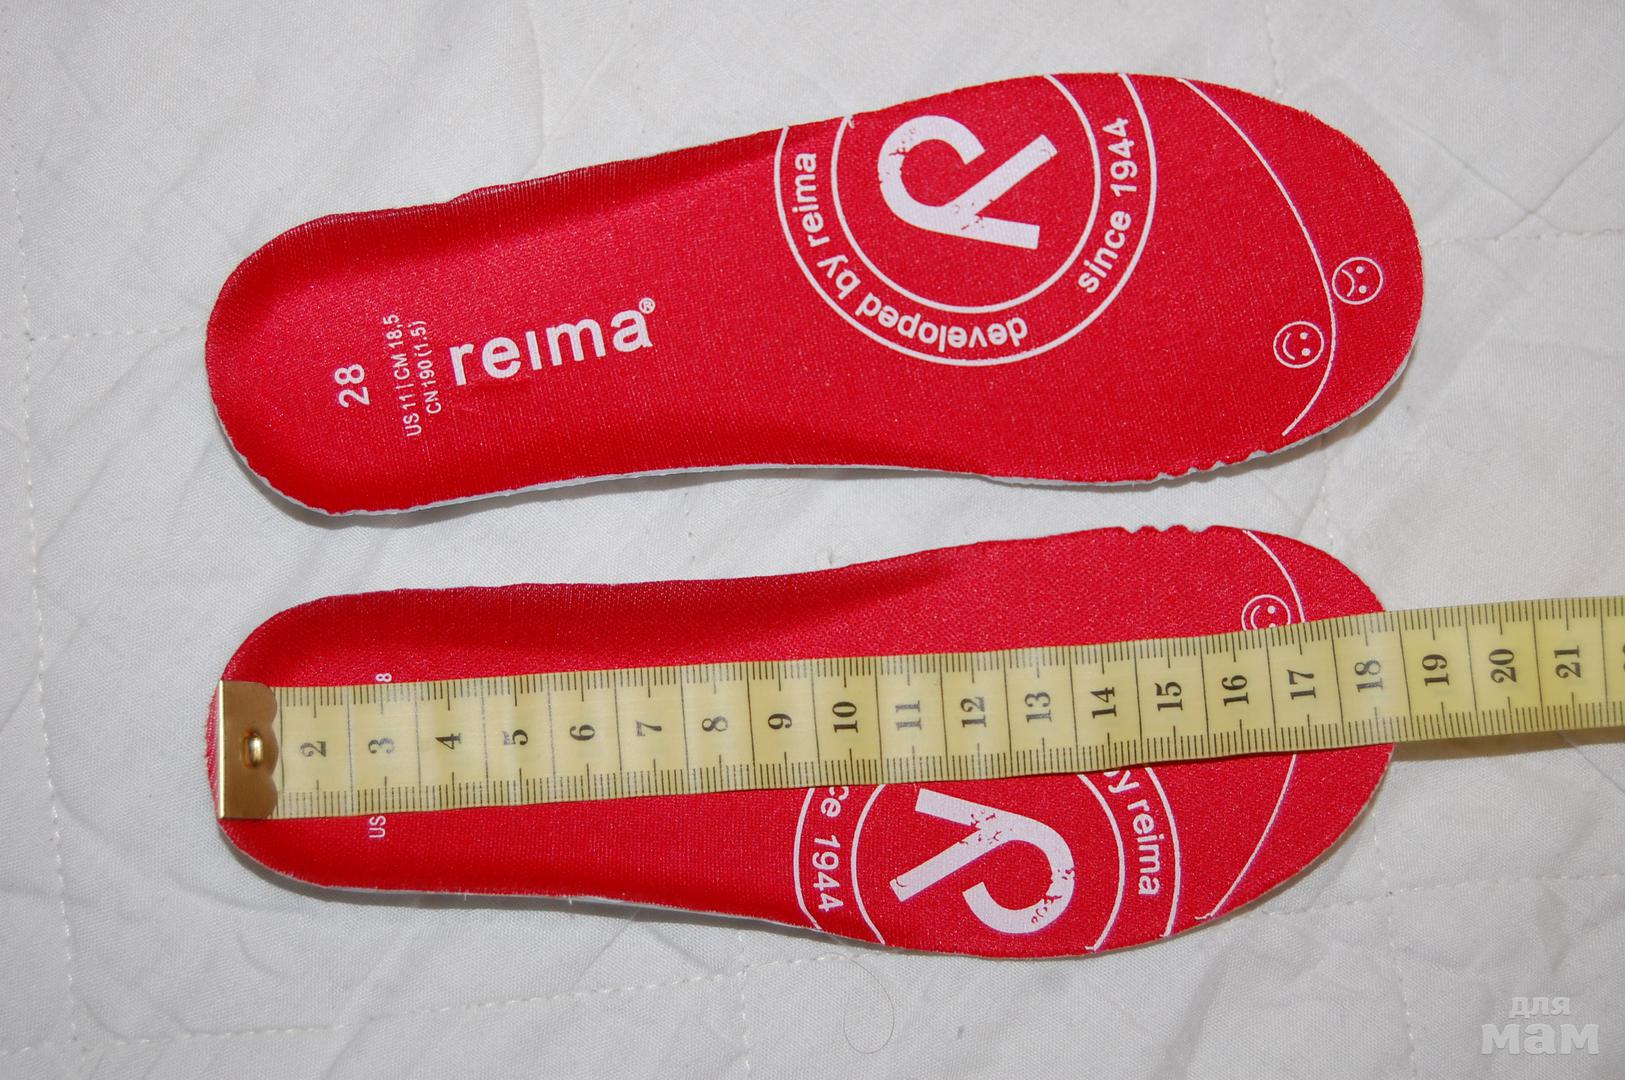 Нога 14 5 см. Reima стелька 27 размер. Ботинки Reimatec 24 размер длина стельки. Стелька Рейма 25 размер. Reima стелька 28.